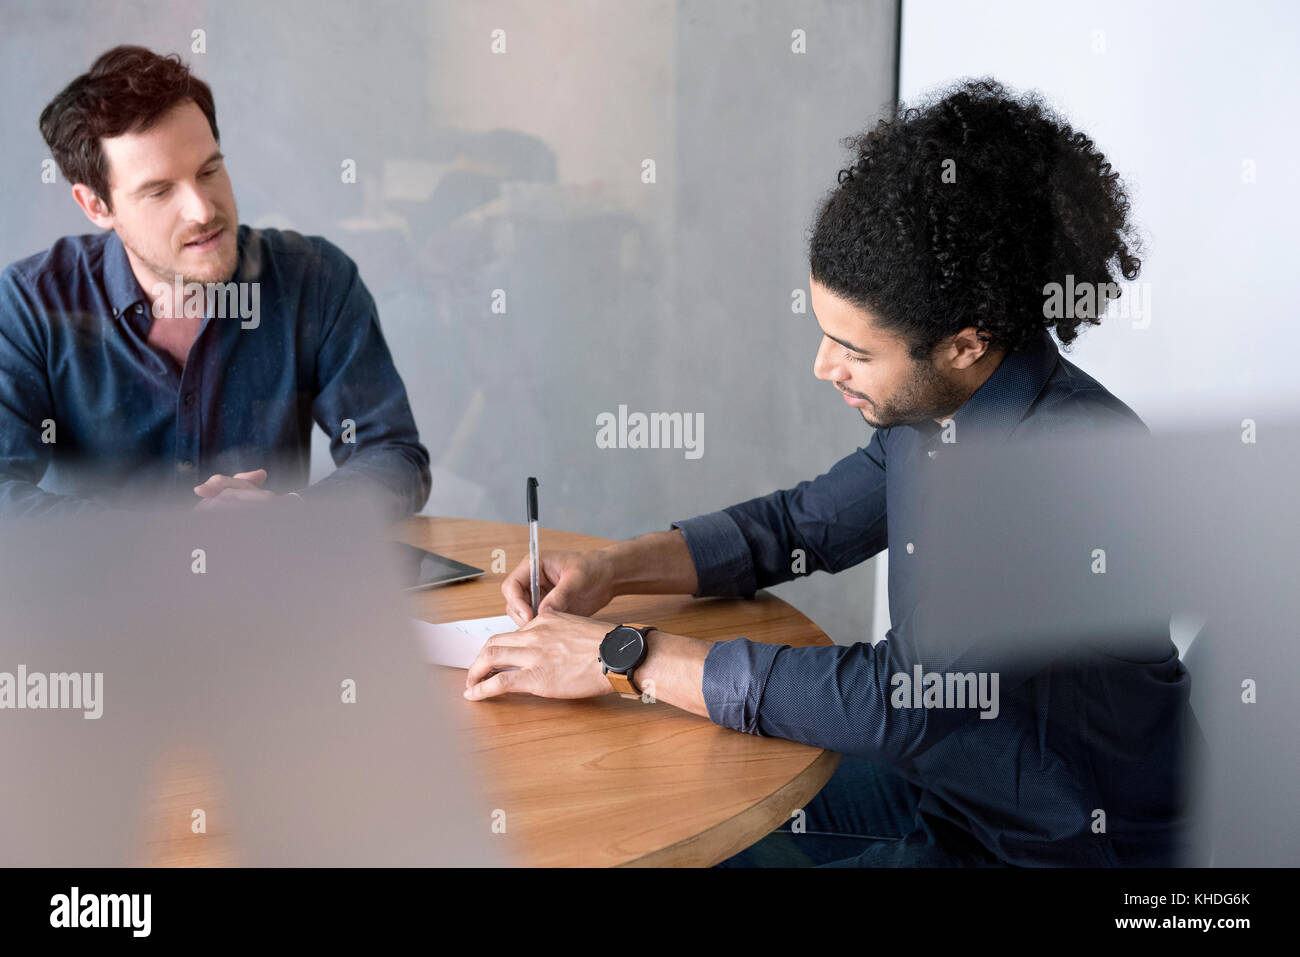 Man signing document Stock Photo